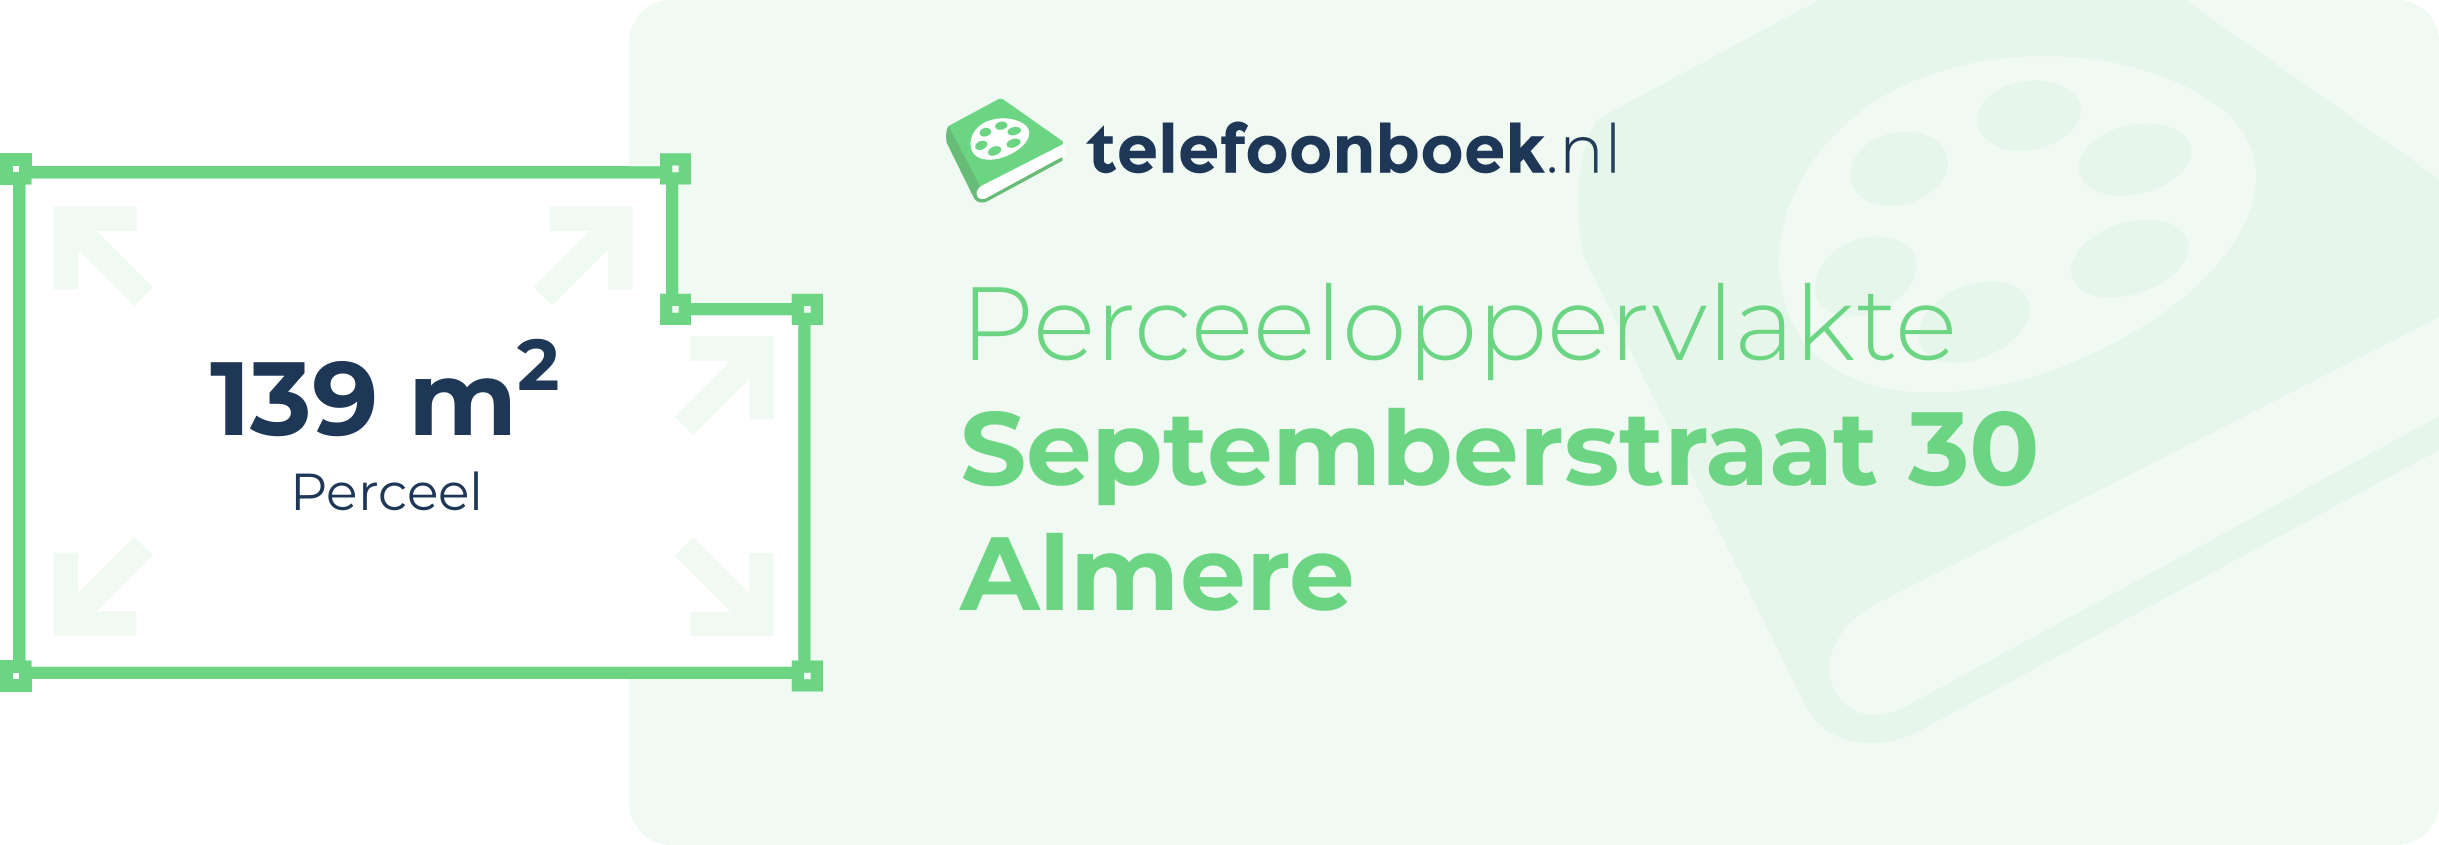 Perceeloppervlakte Septemberstraat 30 Almere